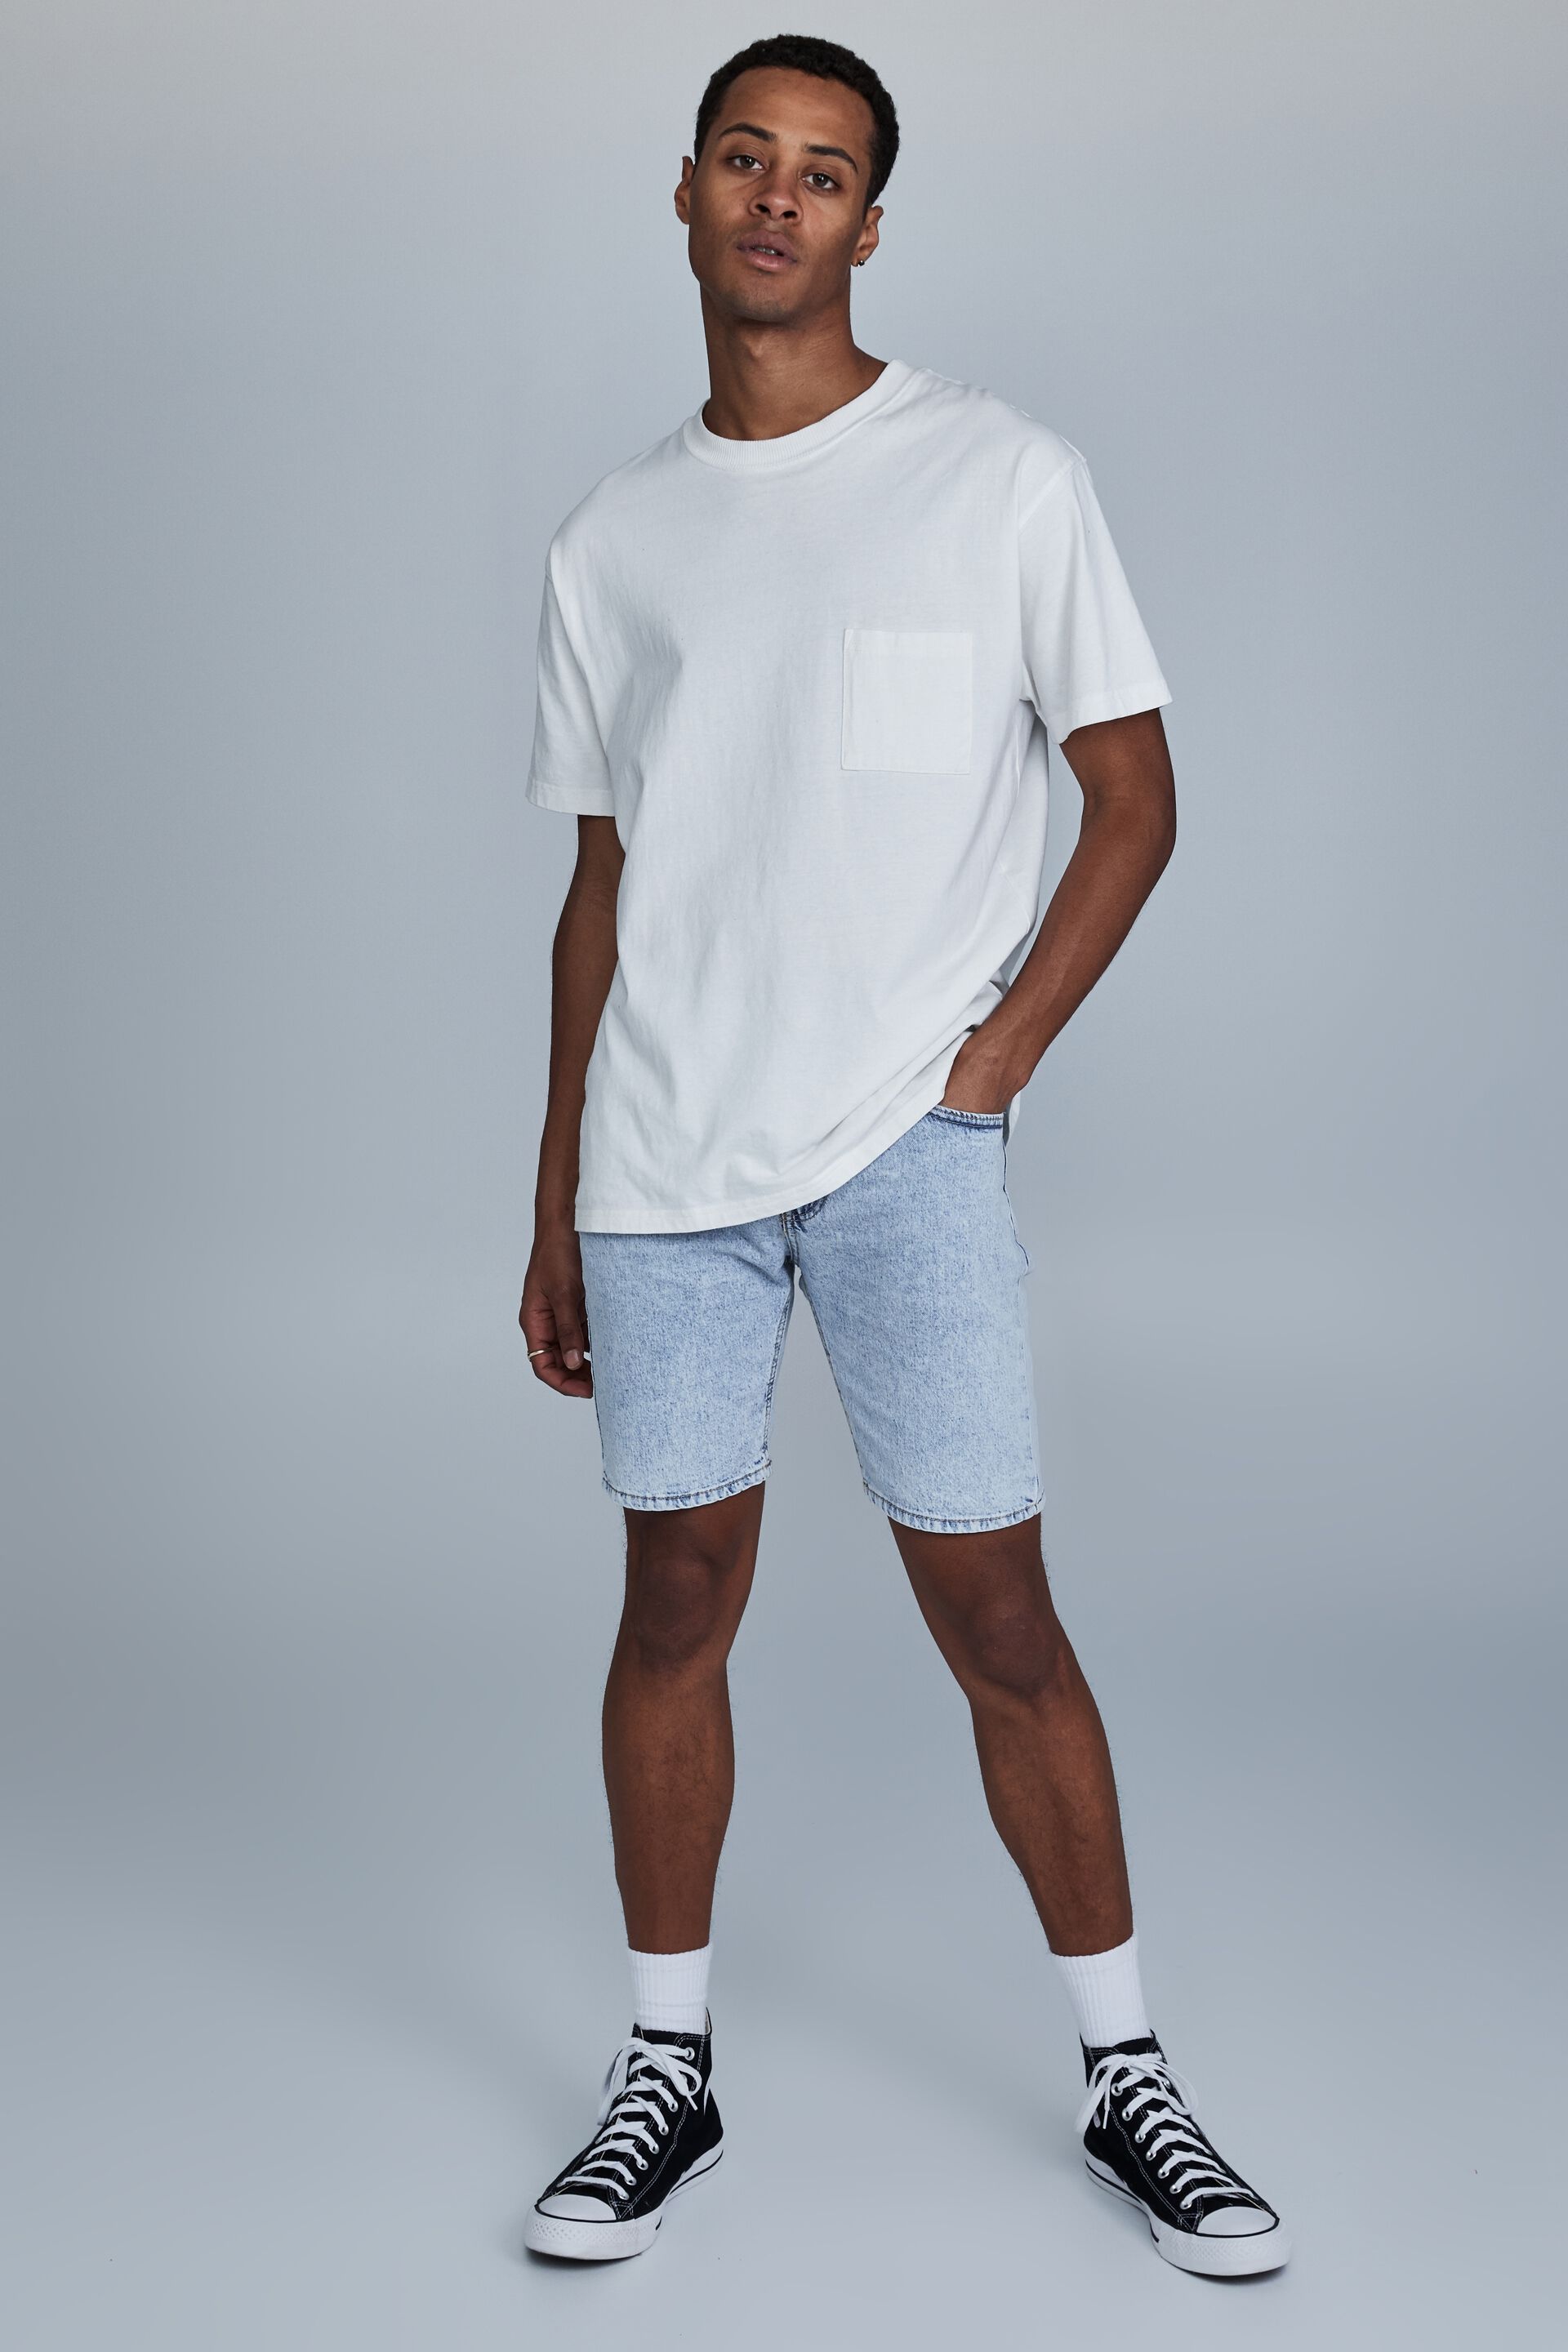 mens short jean shorts